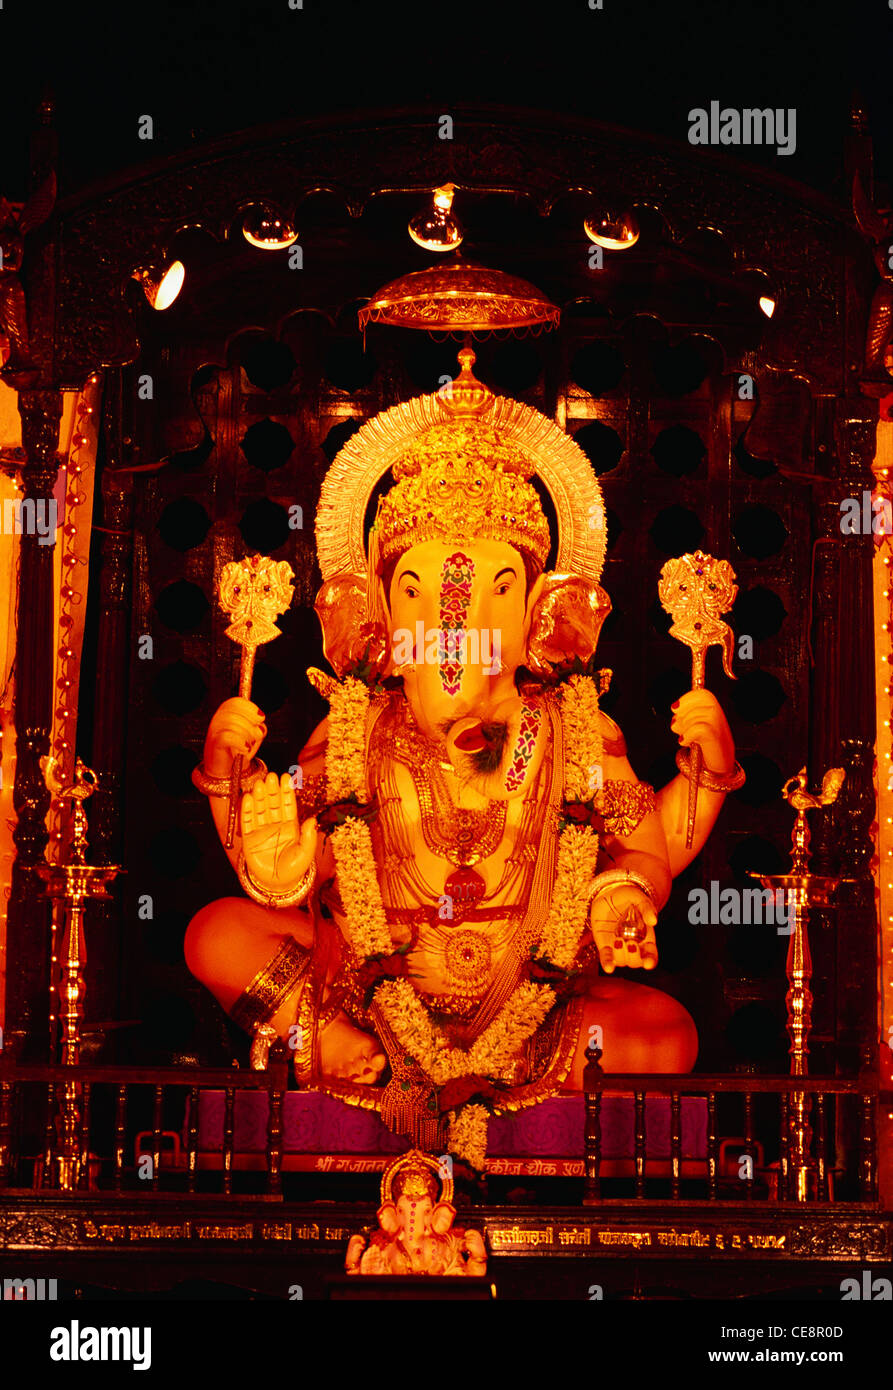 NMK 81398 : Indian God Ganesh ganpati Festival Elephant head Lord idol pune maharashtra india Stock Photo